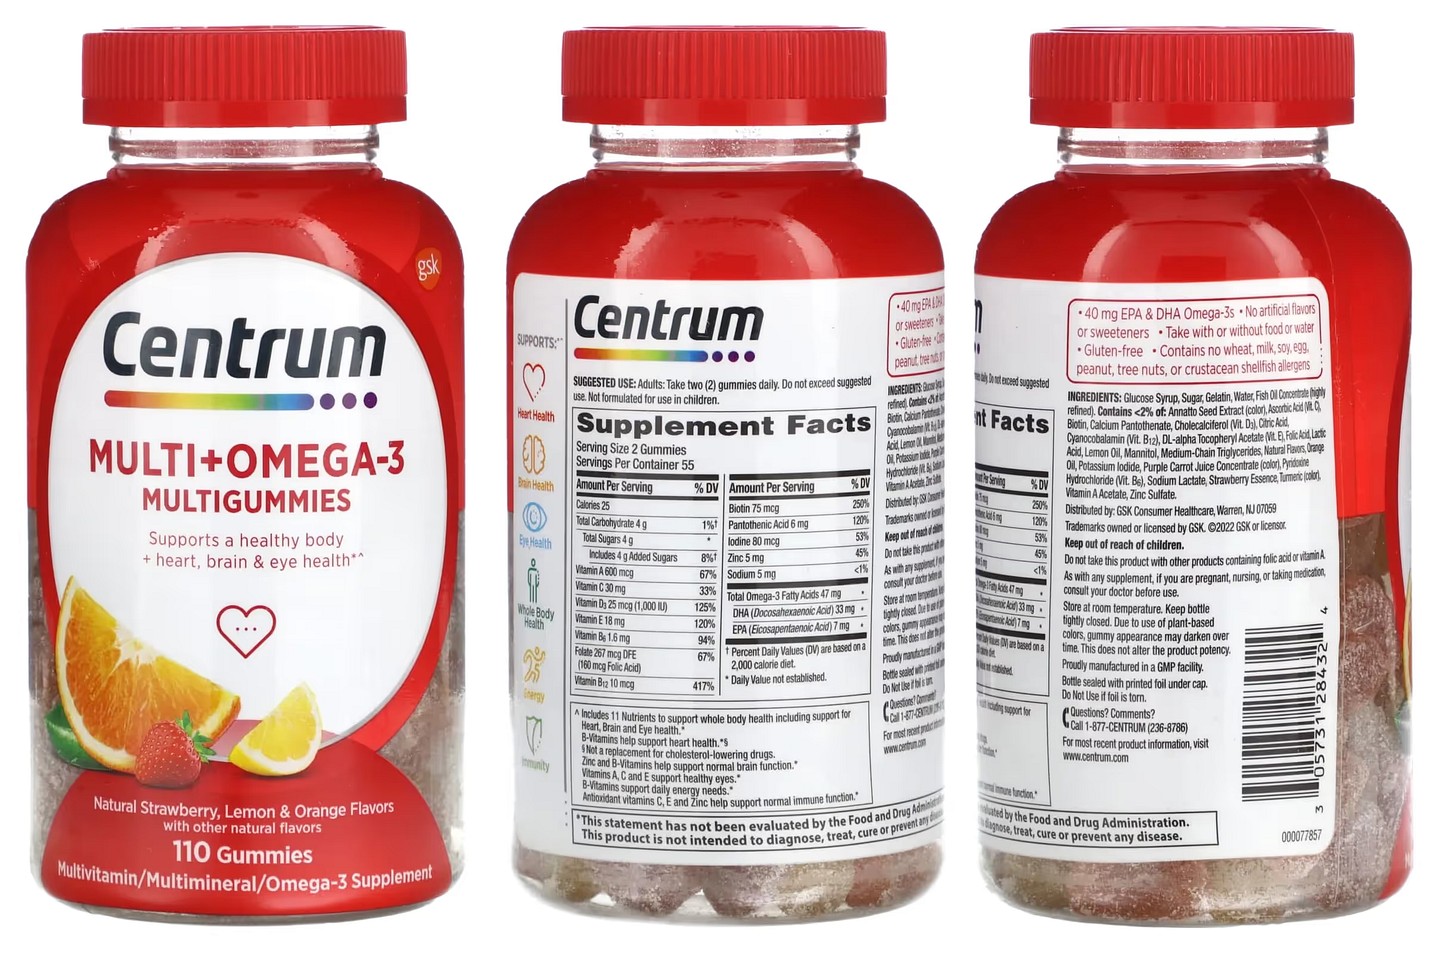 Centrum, Multi + Omega-3 Multigummies packaging